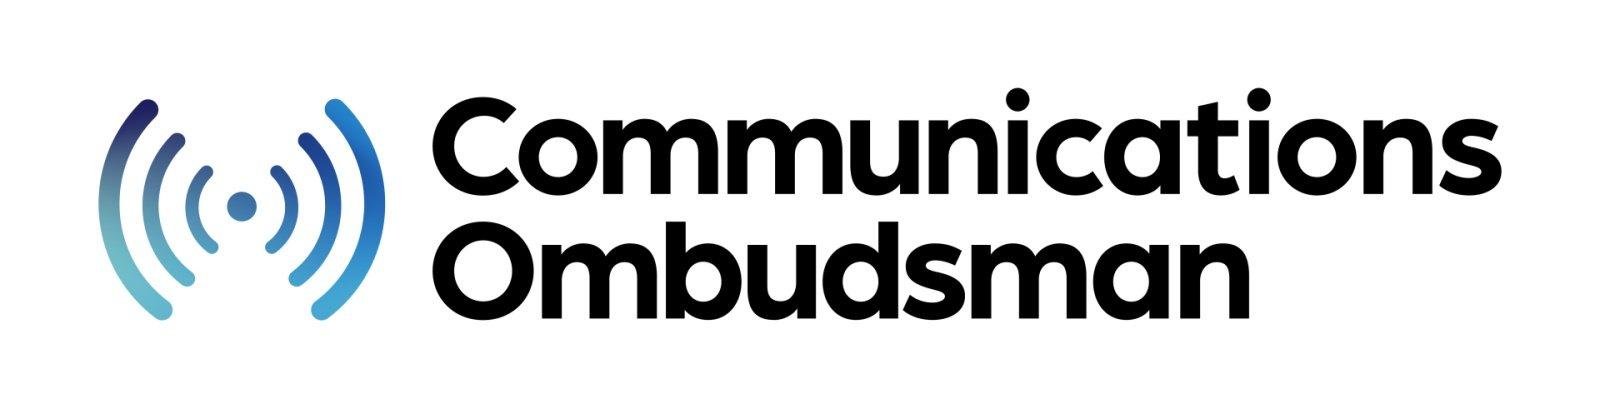 Communications Ombudsman Logo